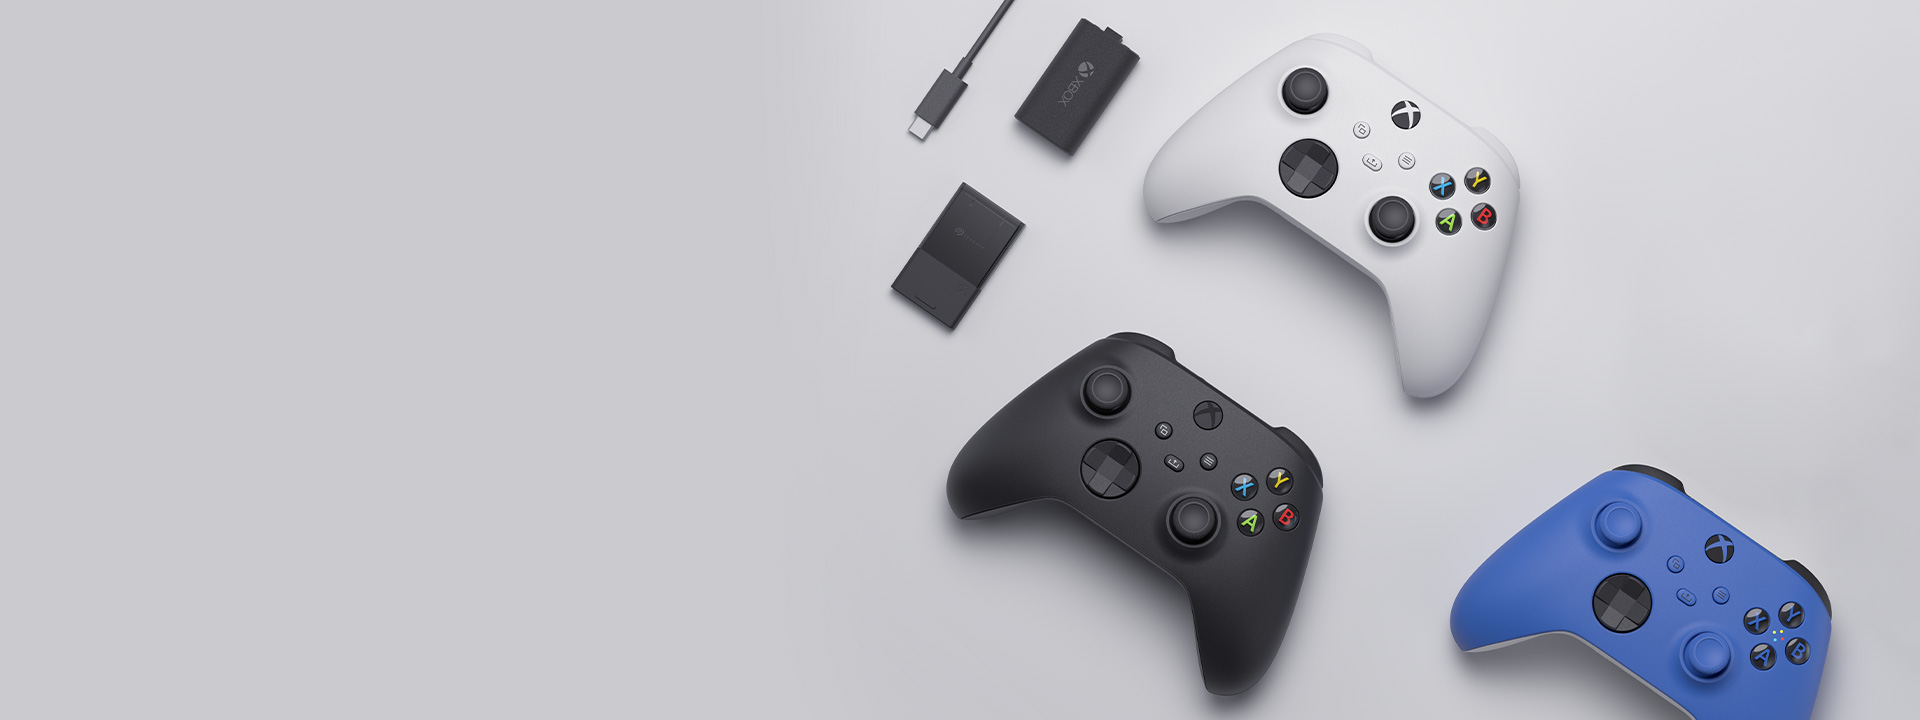 Diverse Xbox-accessoires, waaronder de Xbox draadloze controller, Play and Charge-kit en Seagate Storage Expansion Card voor Xbox Series X|S staan naast elkaar.